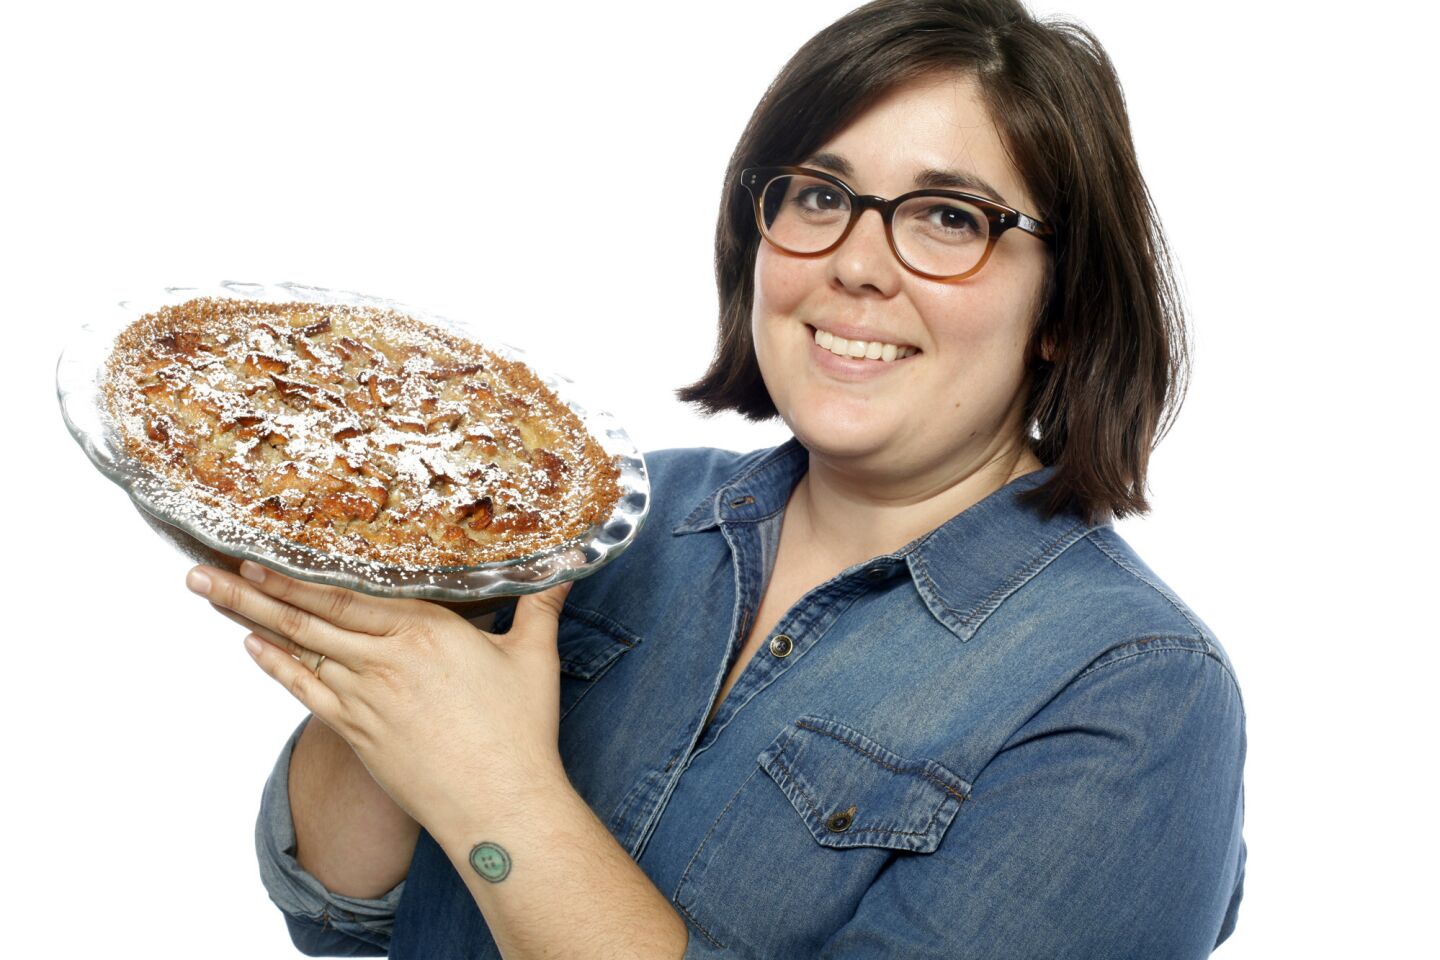 Nicole Rucker and her apple custard crumb pie